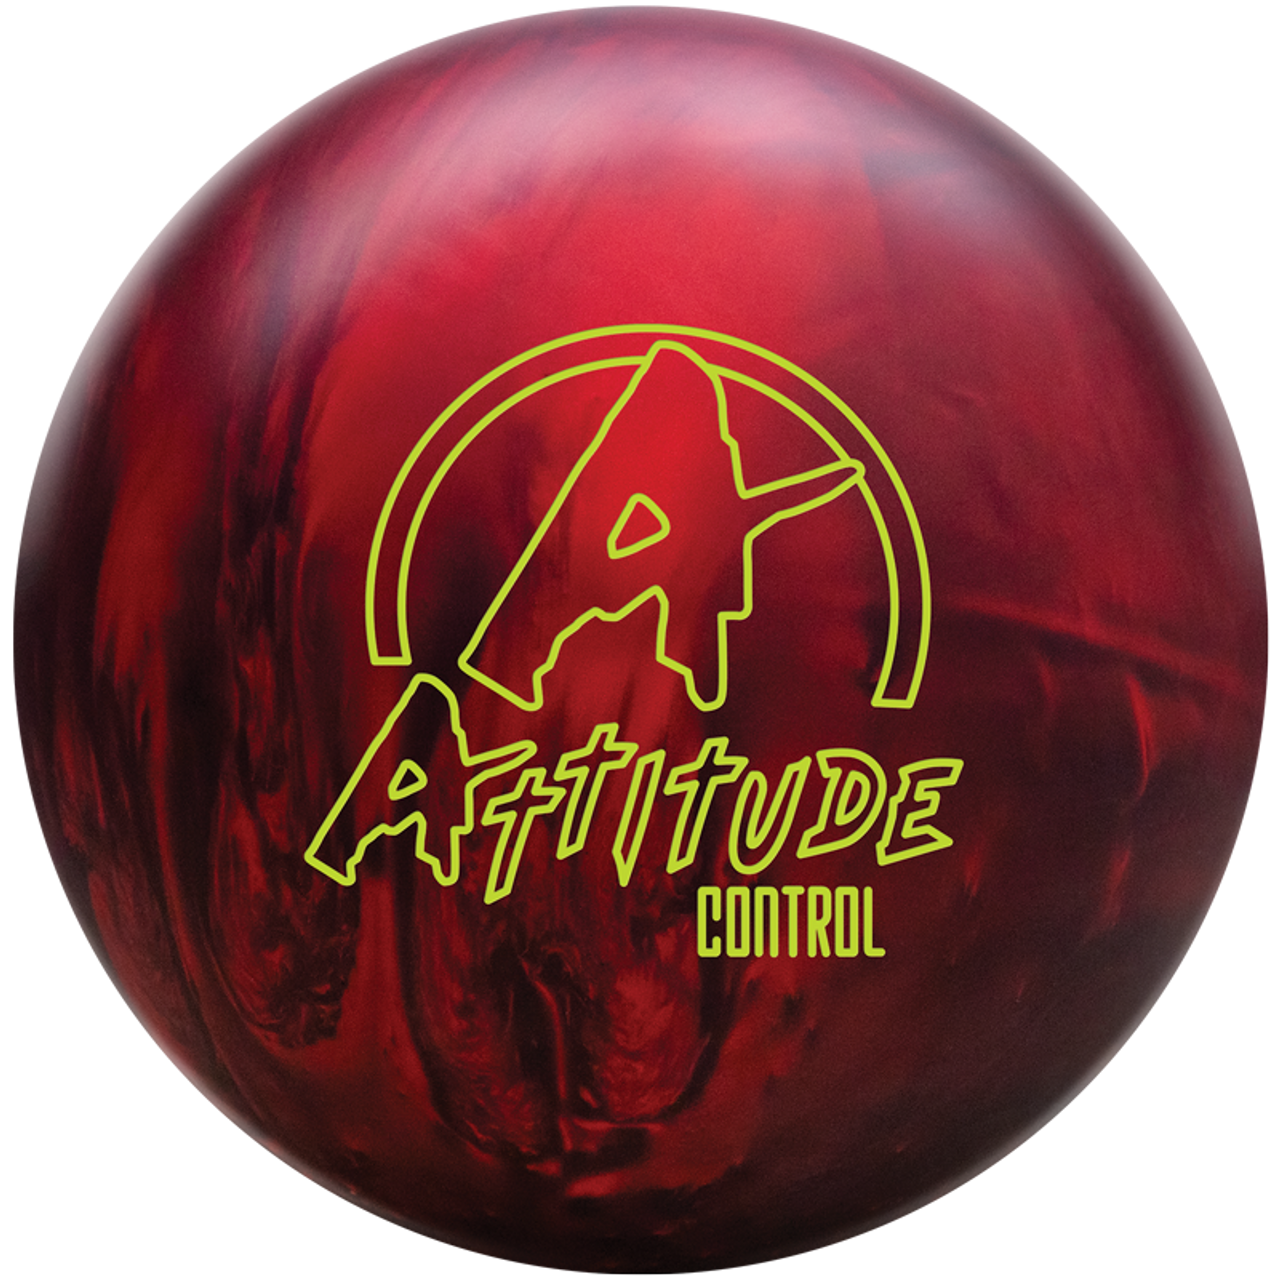 Brunswick Attitude Control Bowling Ball